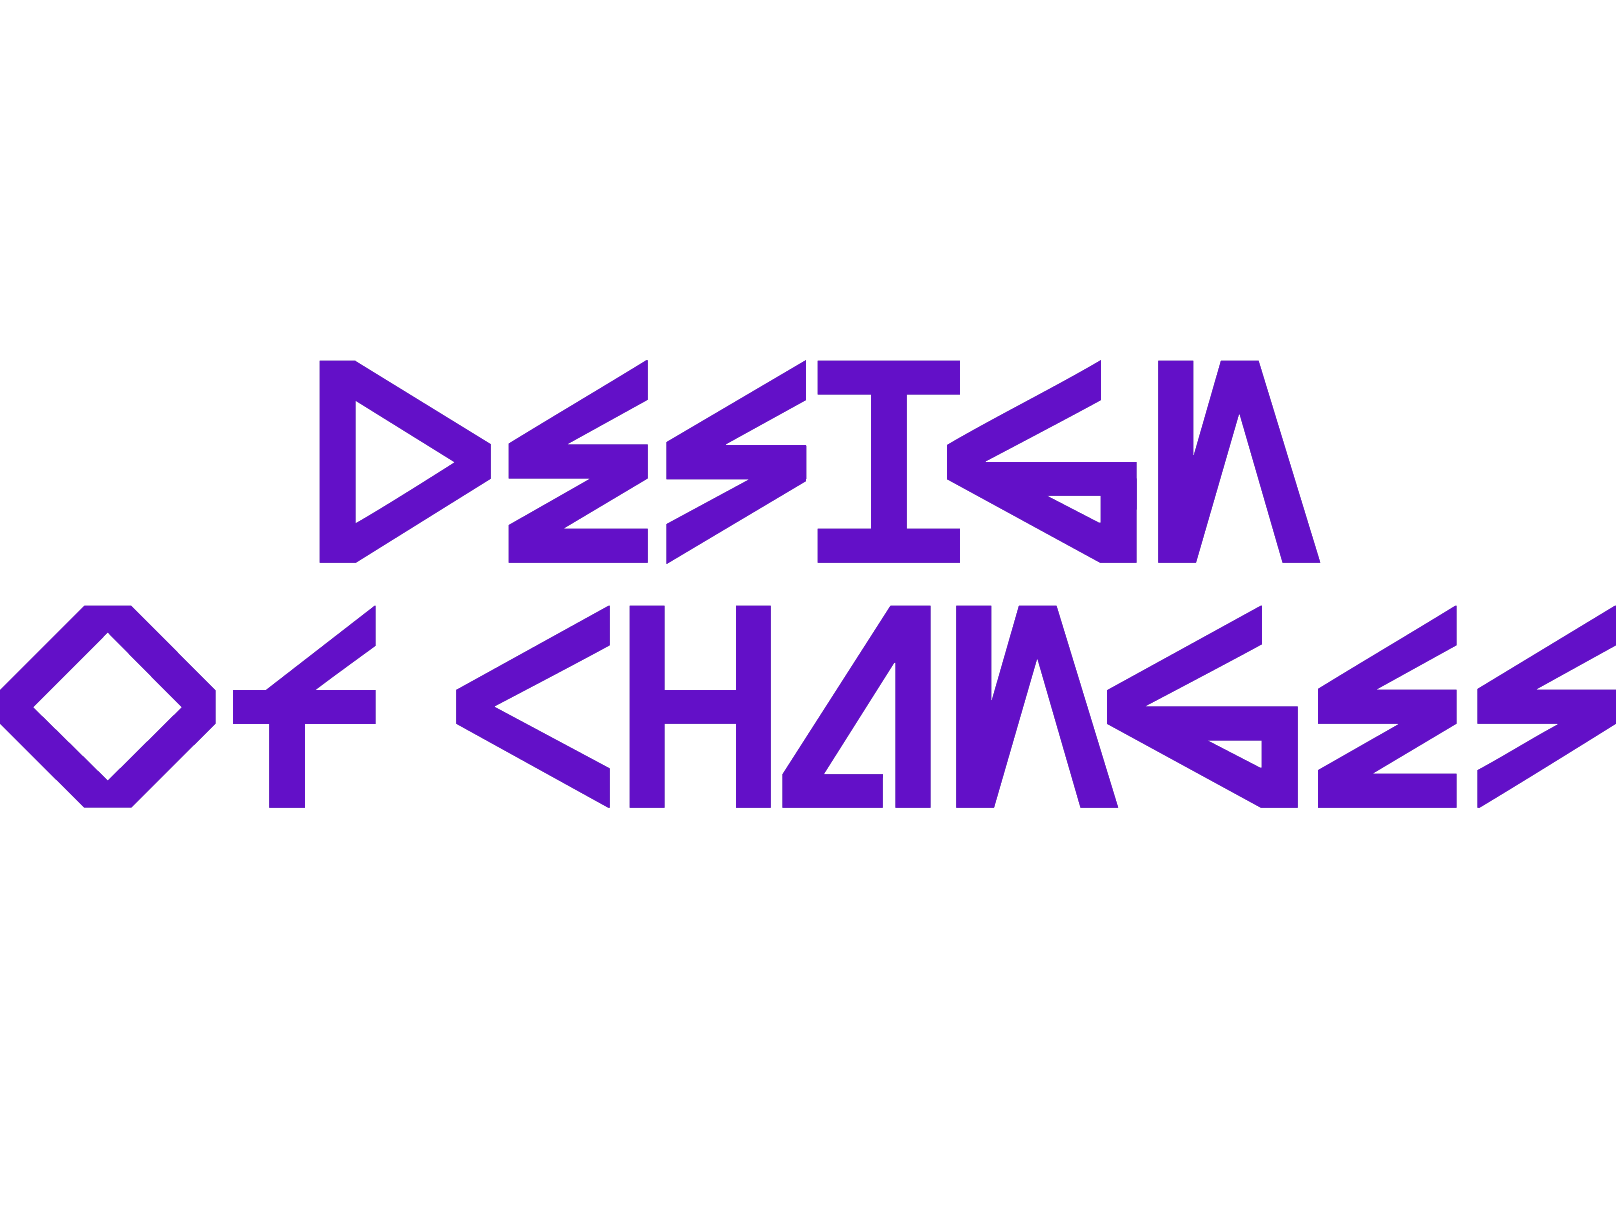 Design of Changes